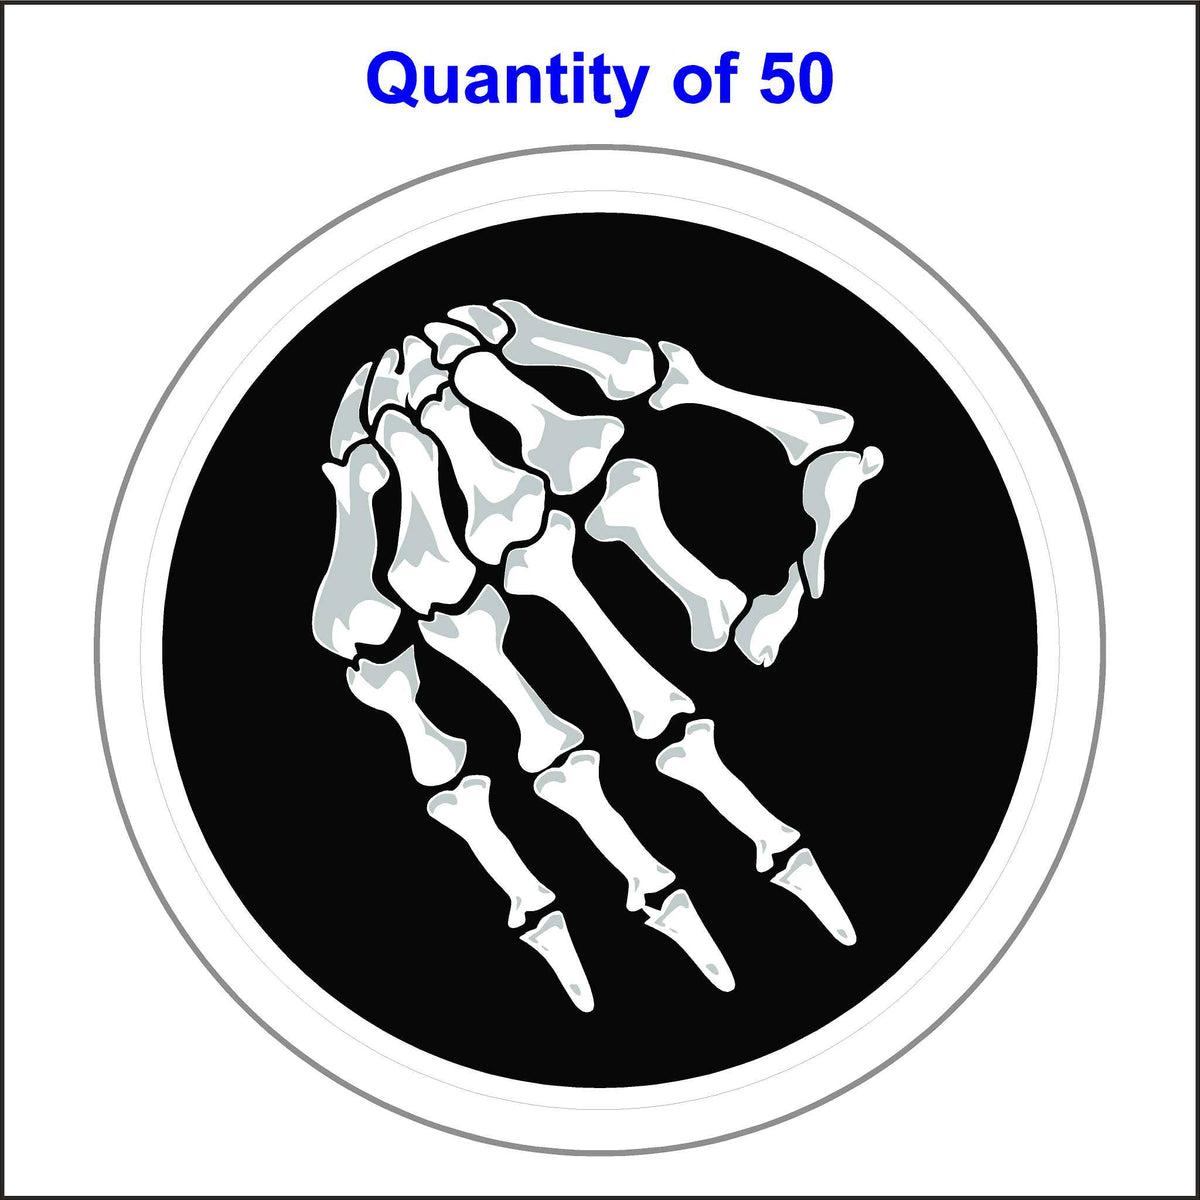 Skeleton Circle Game Sticker. 50 Quantity.